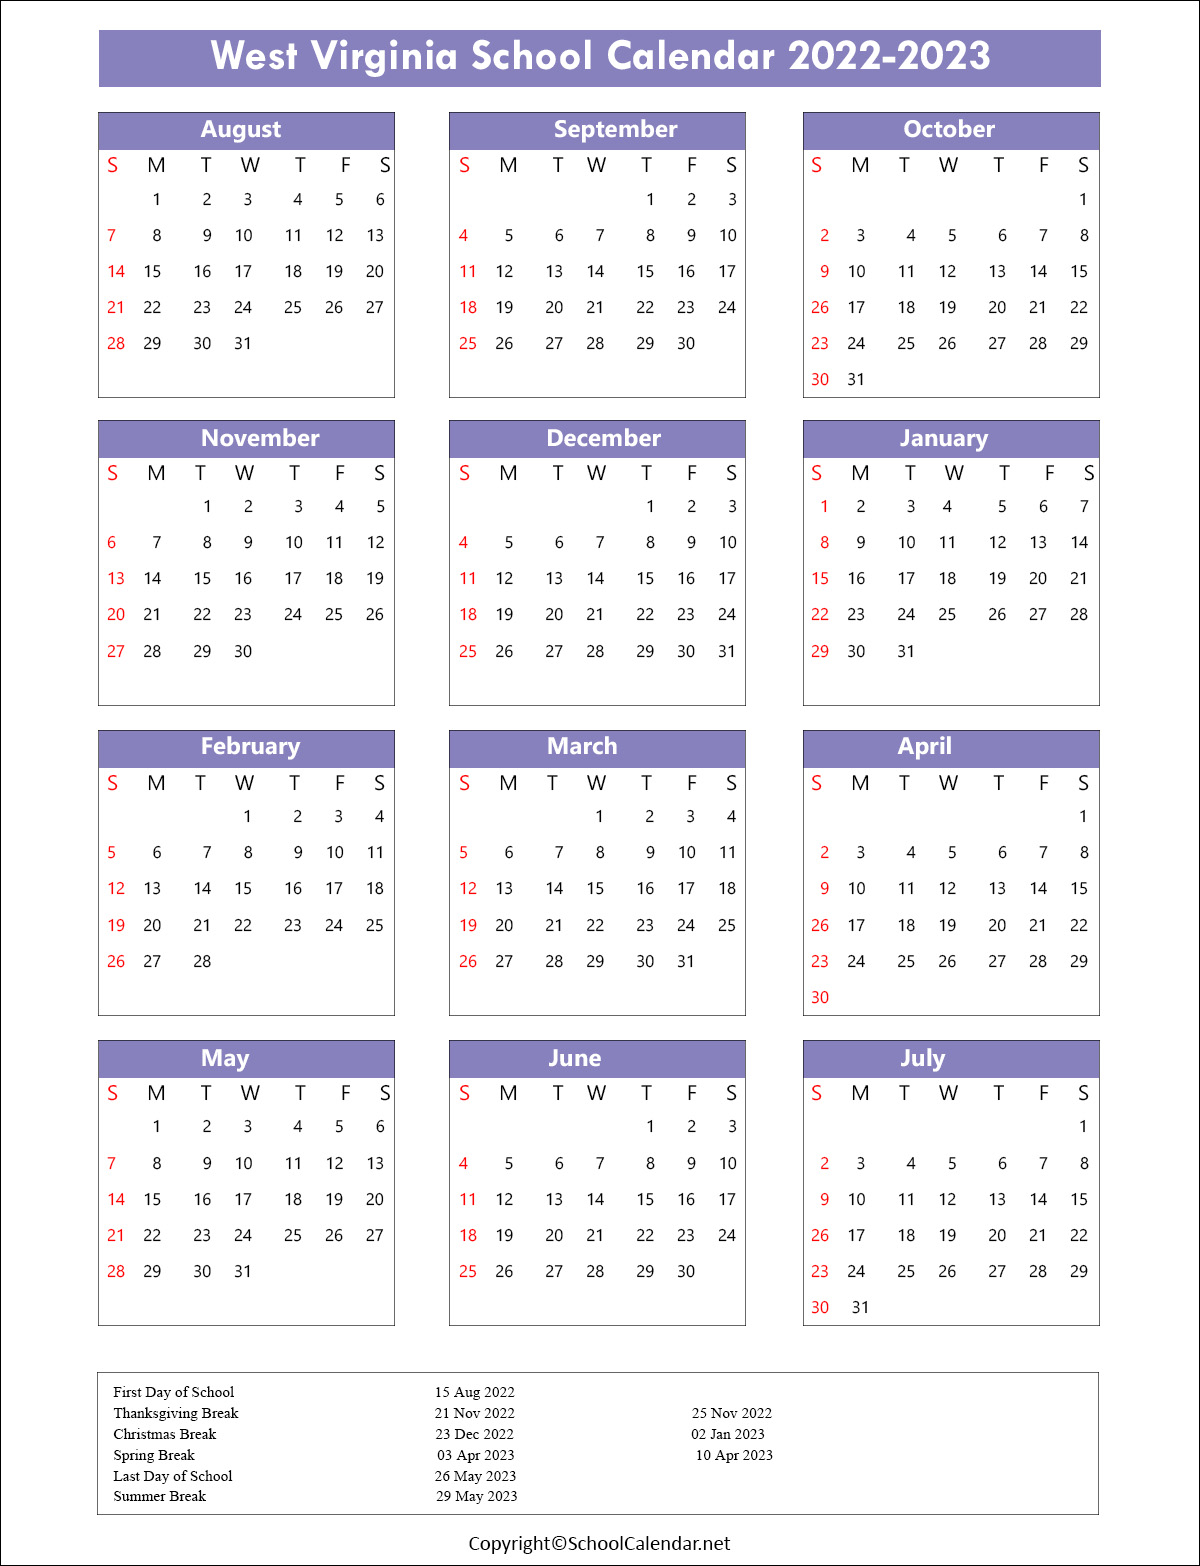 West-Virginia School Calendar 2022